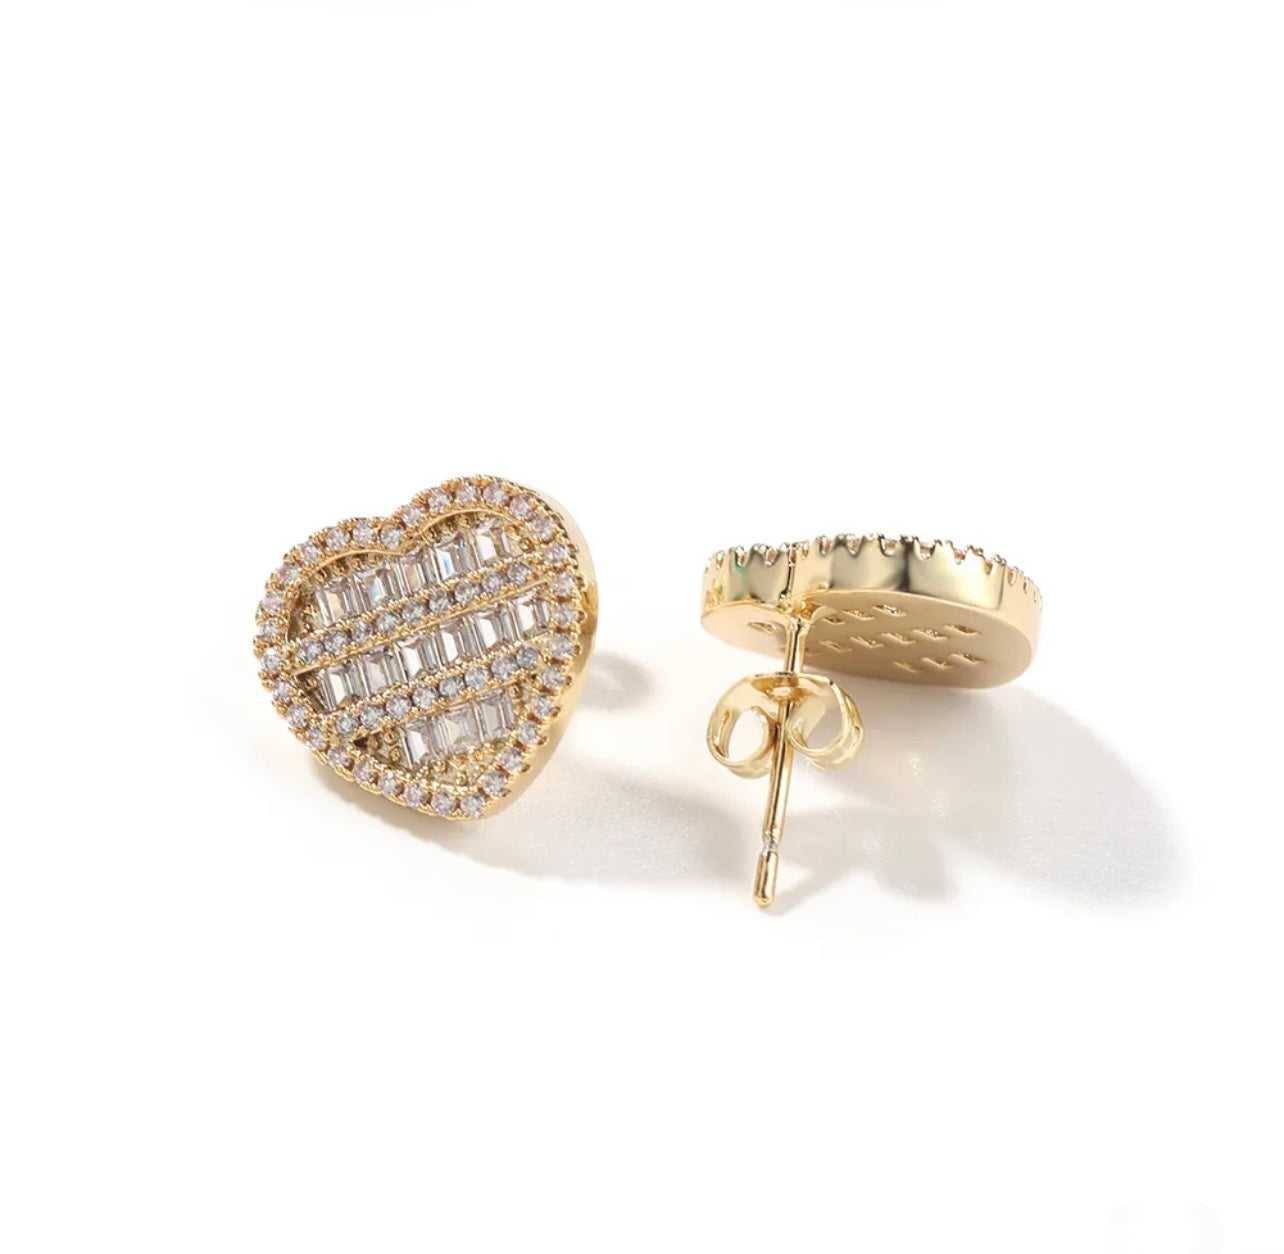 Crushed Heart Earrings “Gold”